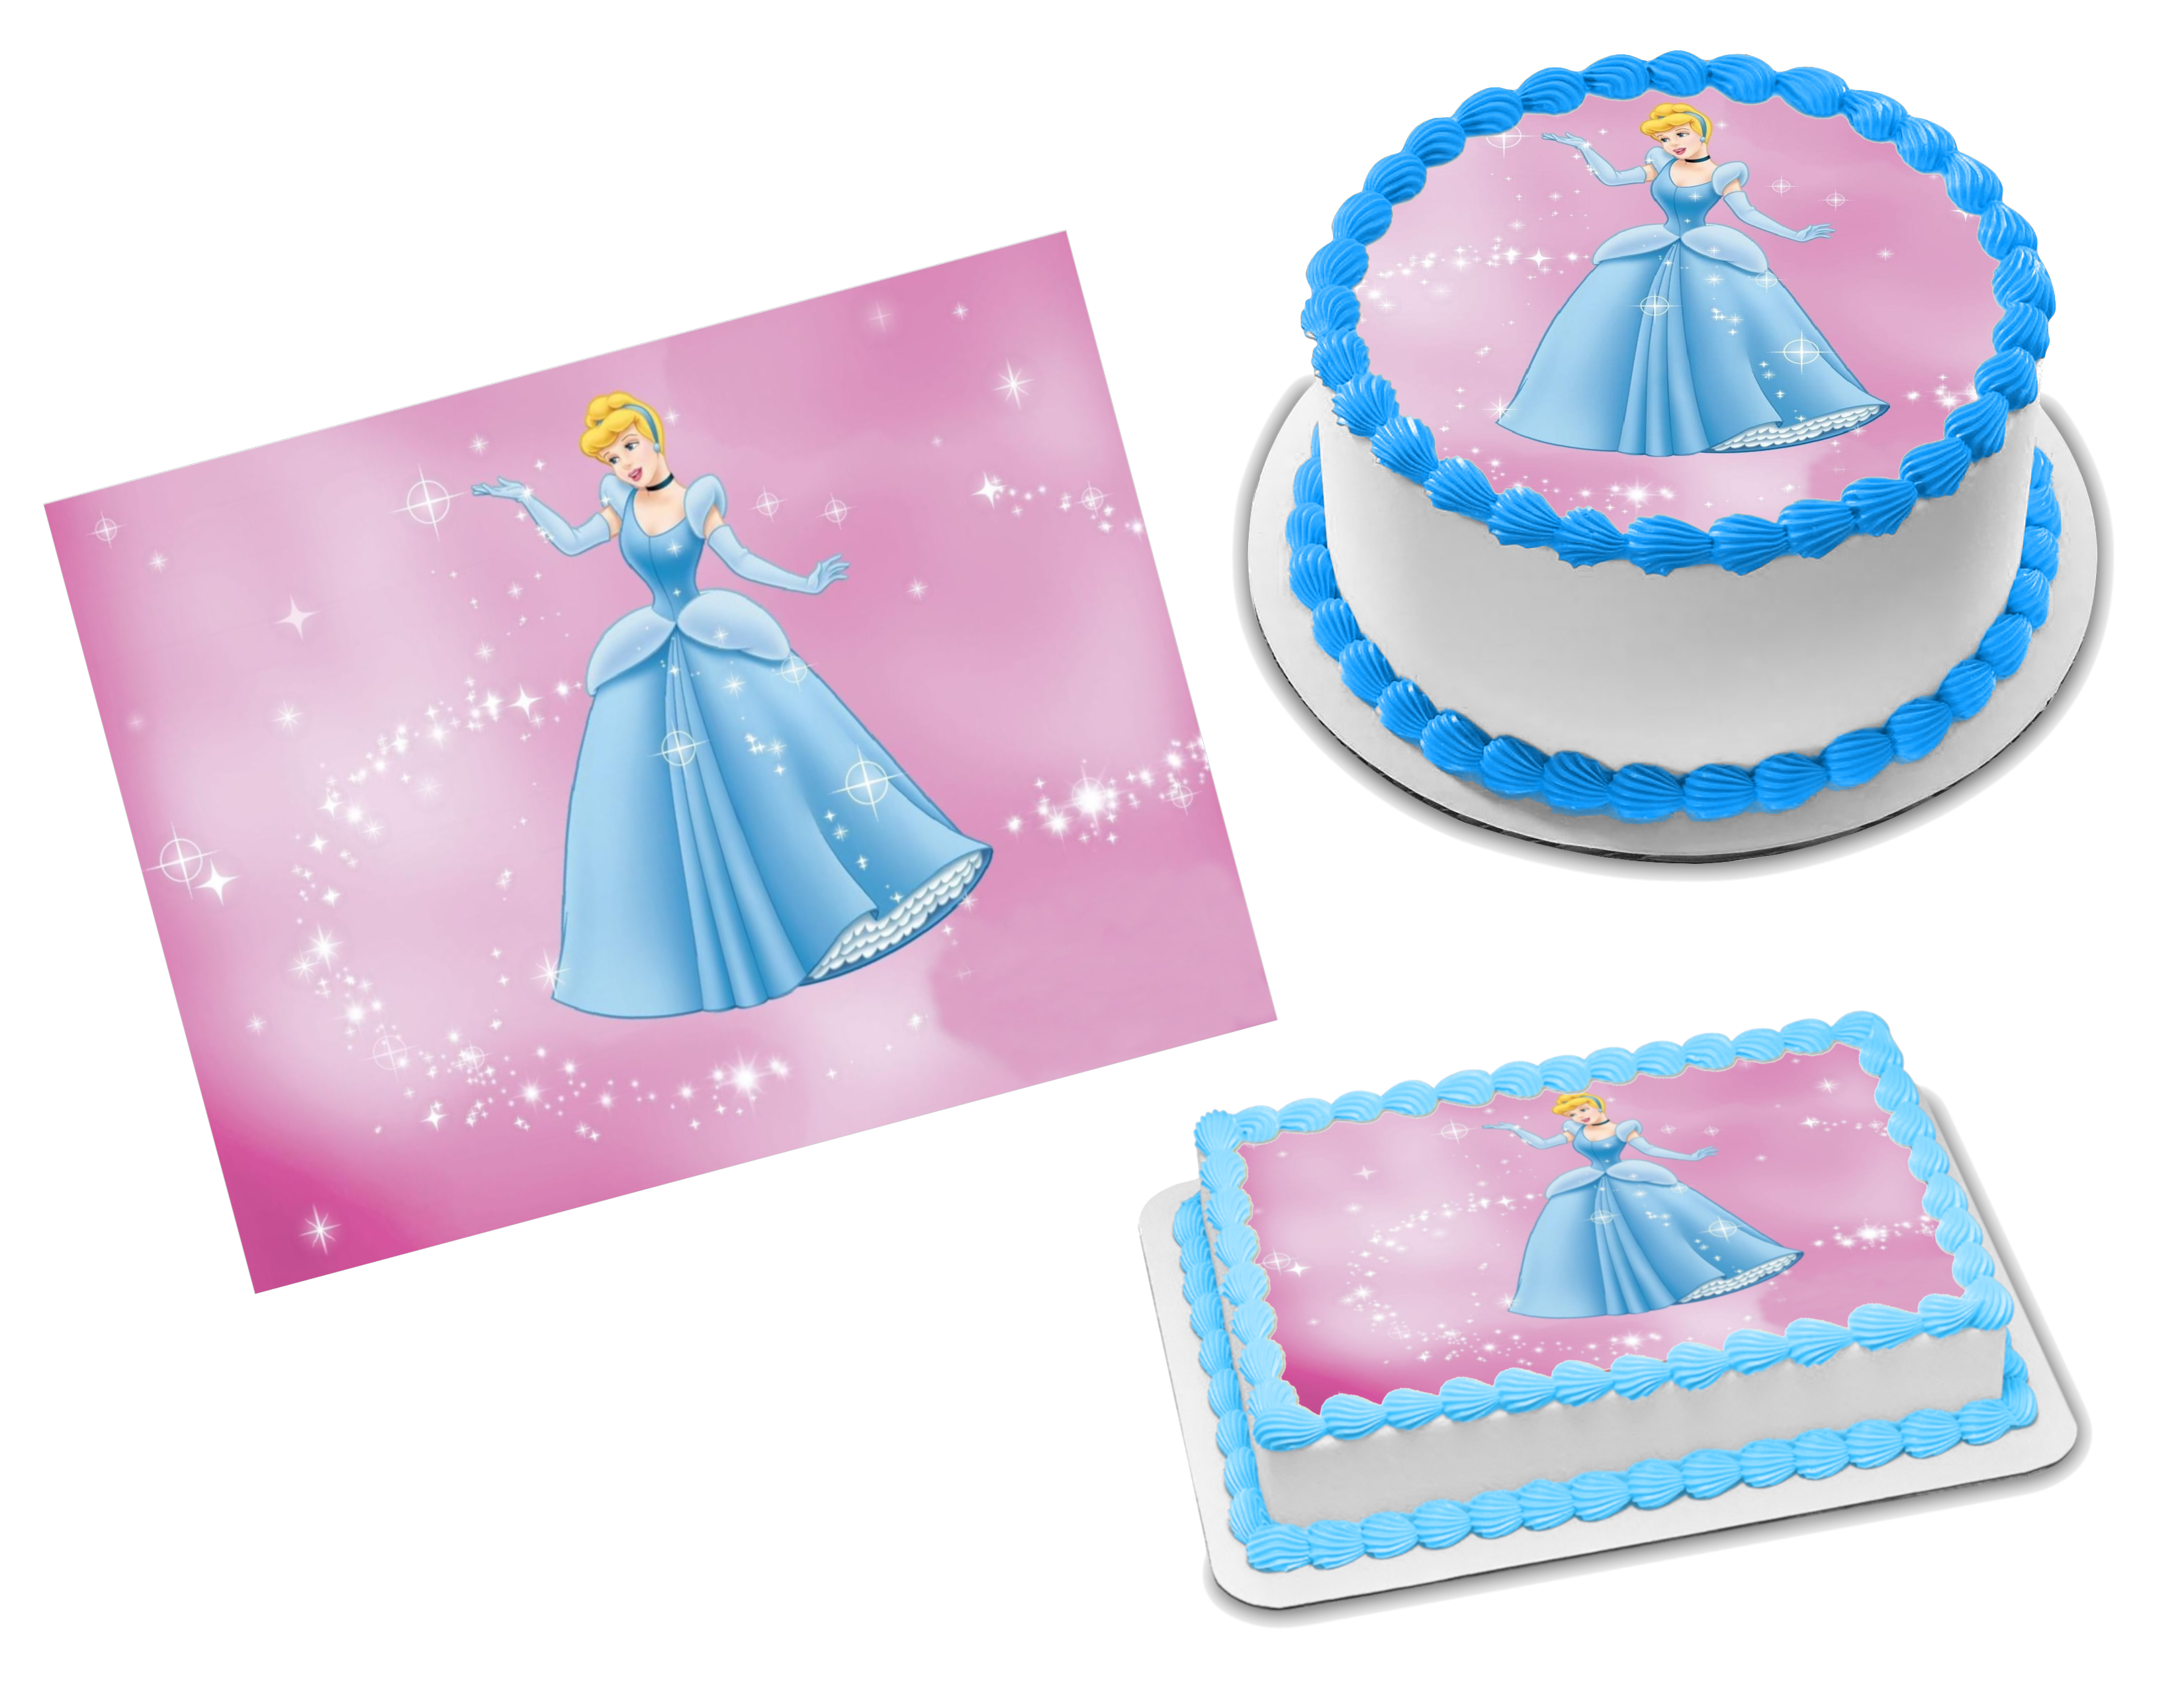 Cinderella Cake Design Images | Cinderella Birthday Cake Ideas - YouTube